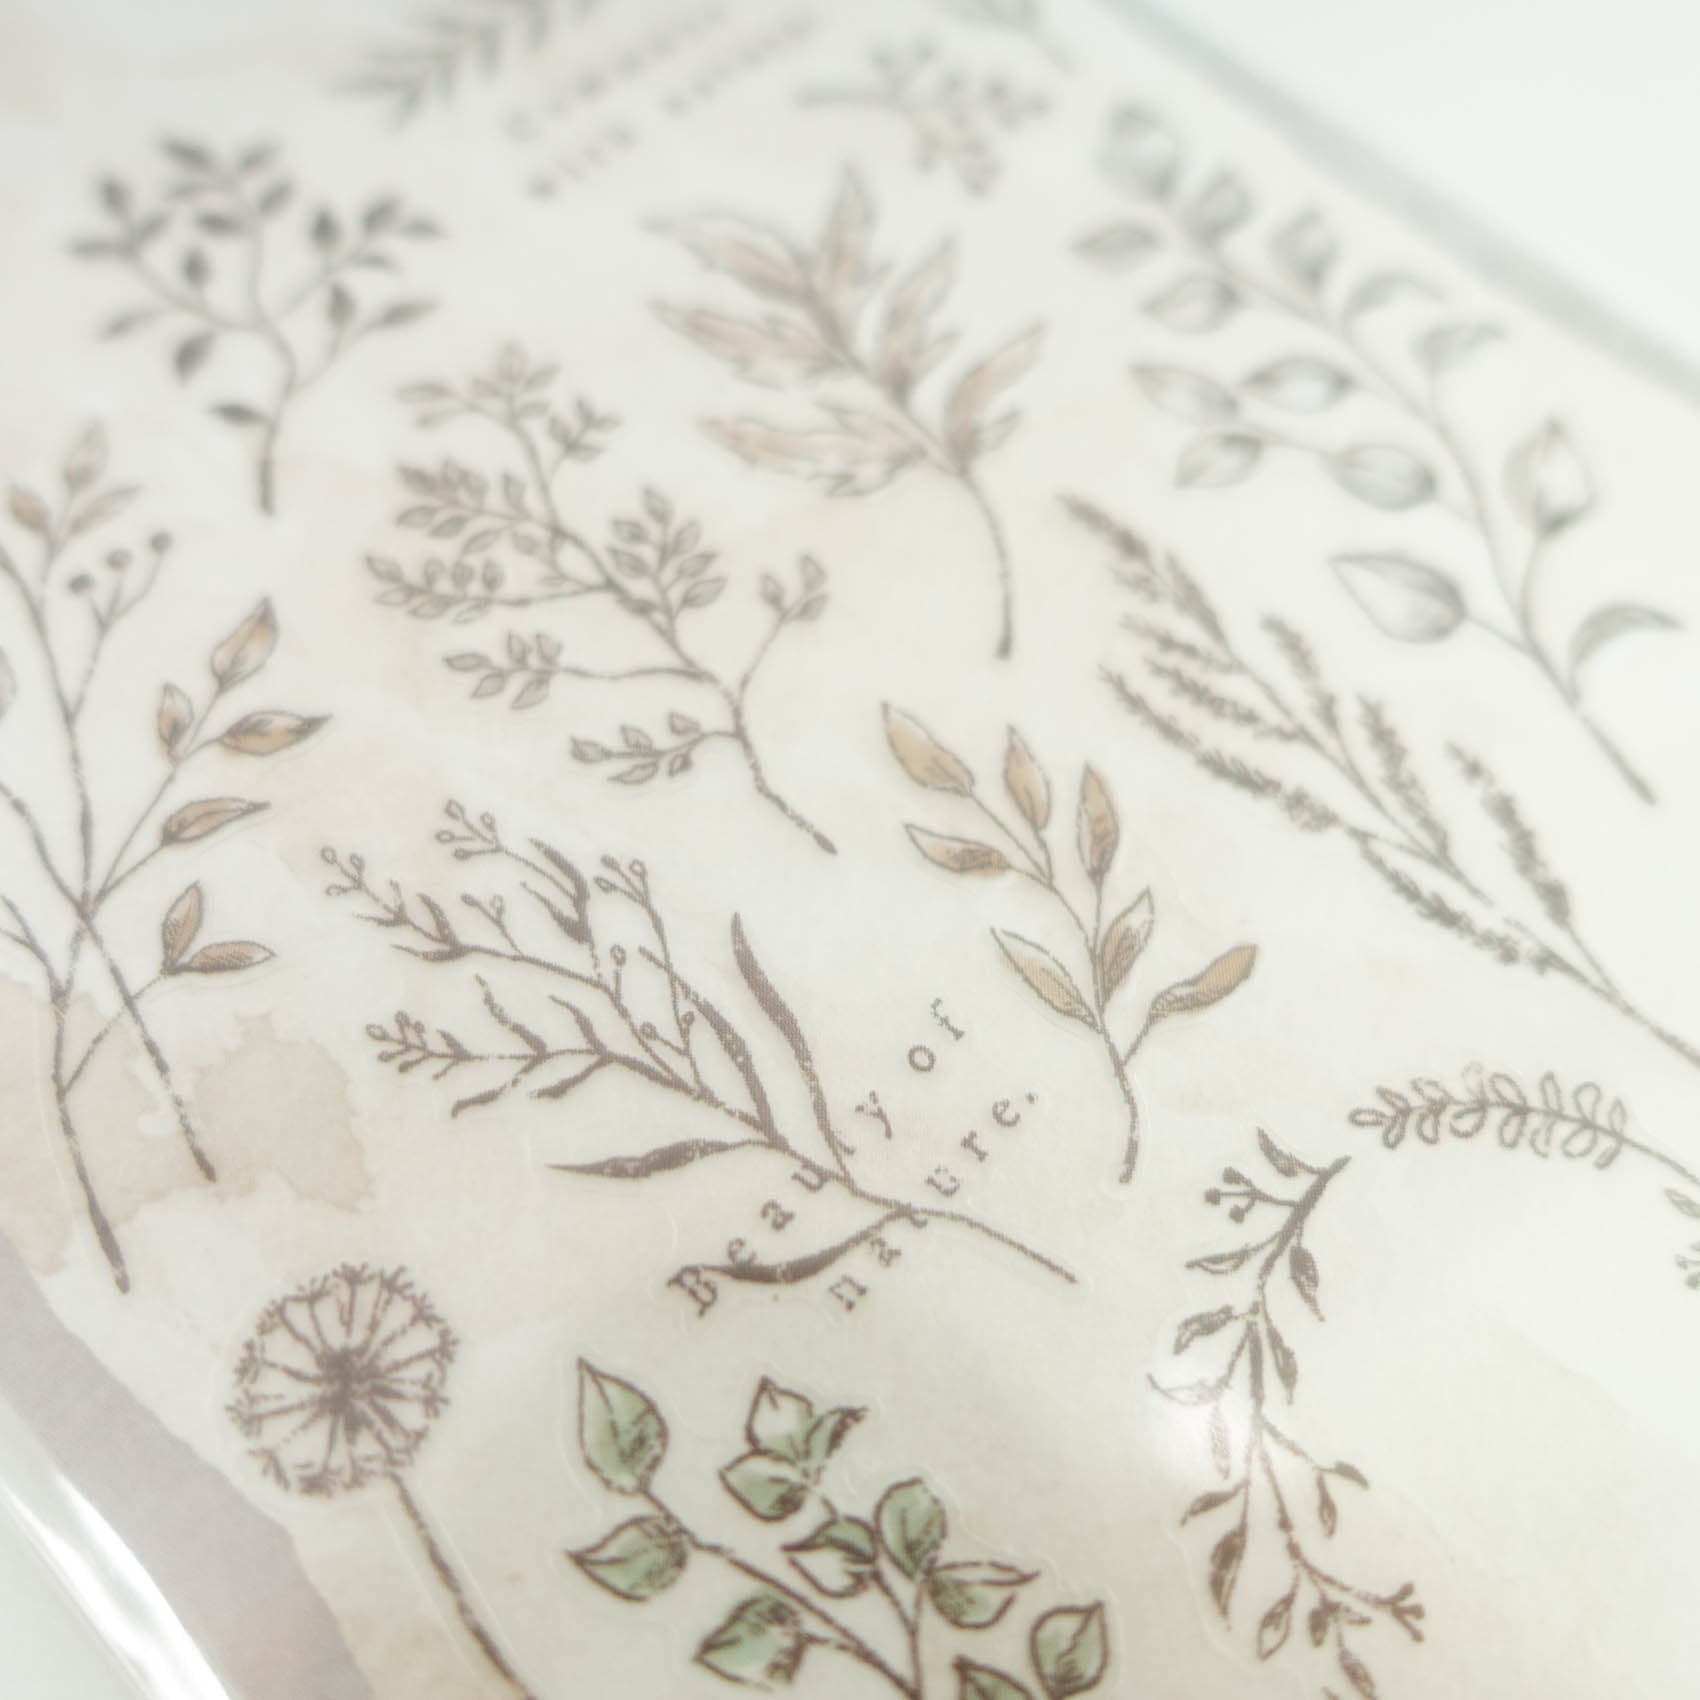 Sepia Flowers 'Decor Sticker' Sheet